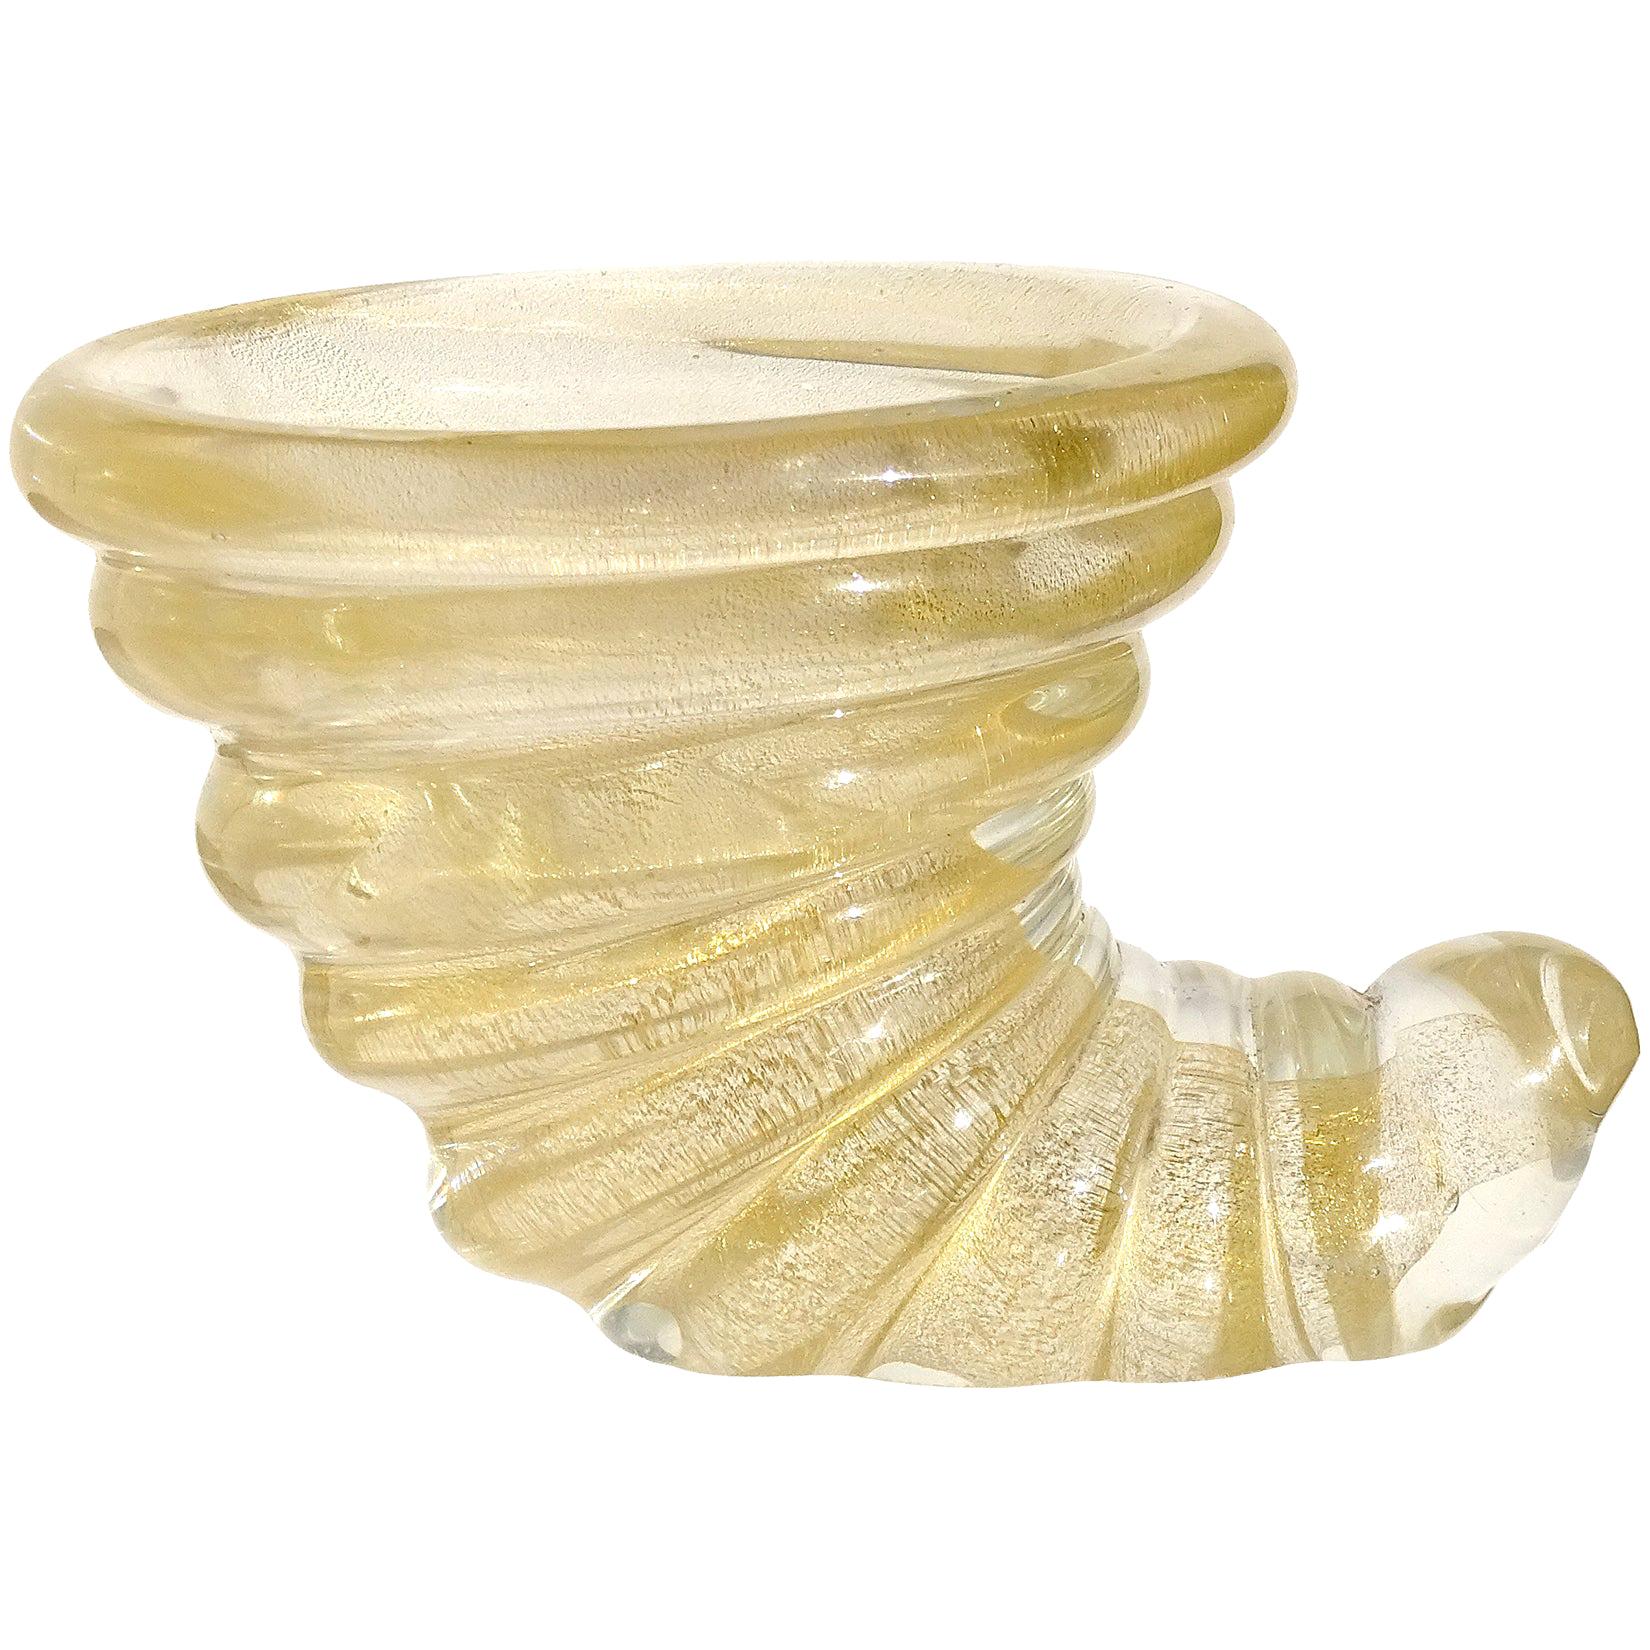 Sculptures repose-plat en verre d'art italien de Murano en forme de coquillage avec mouchetures d'or de Barovier Toso en vente